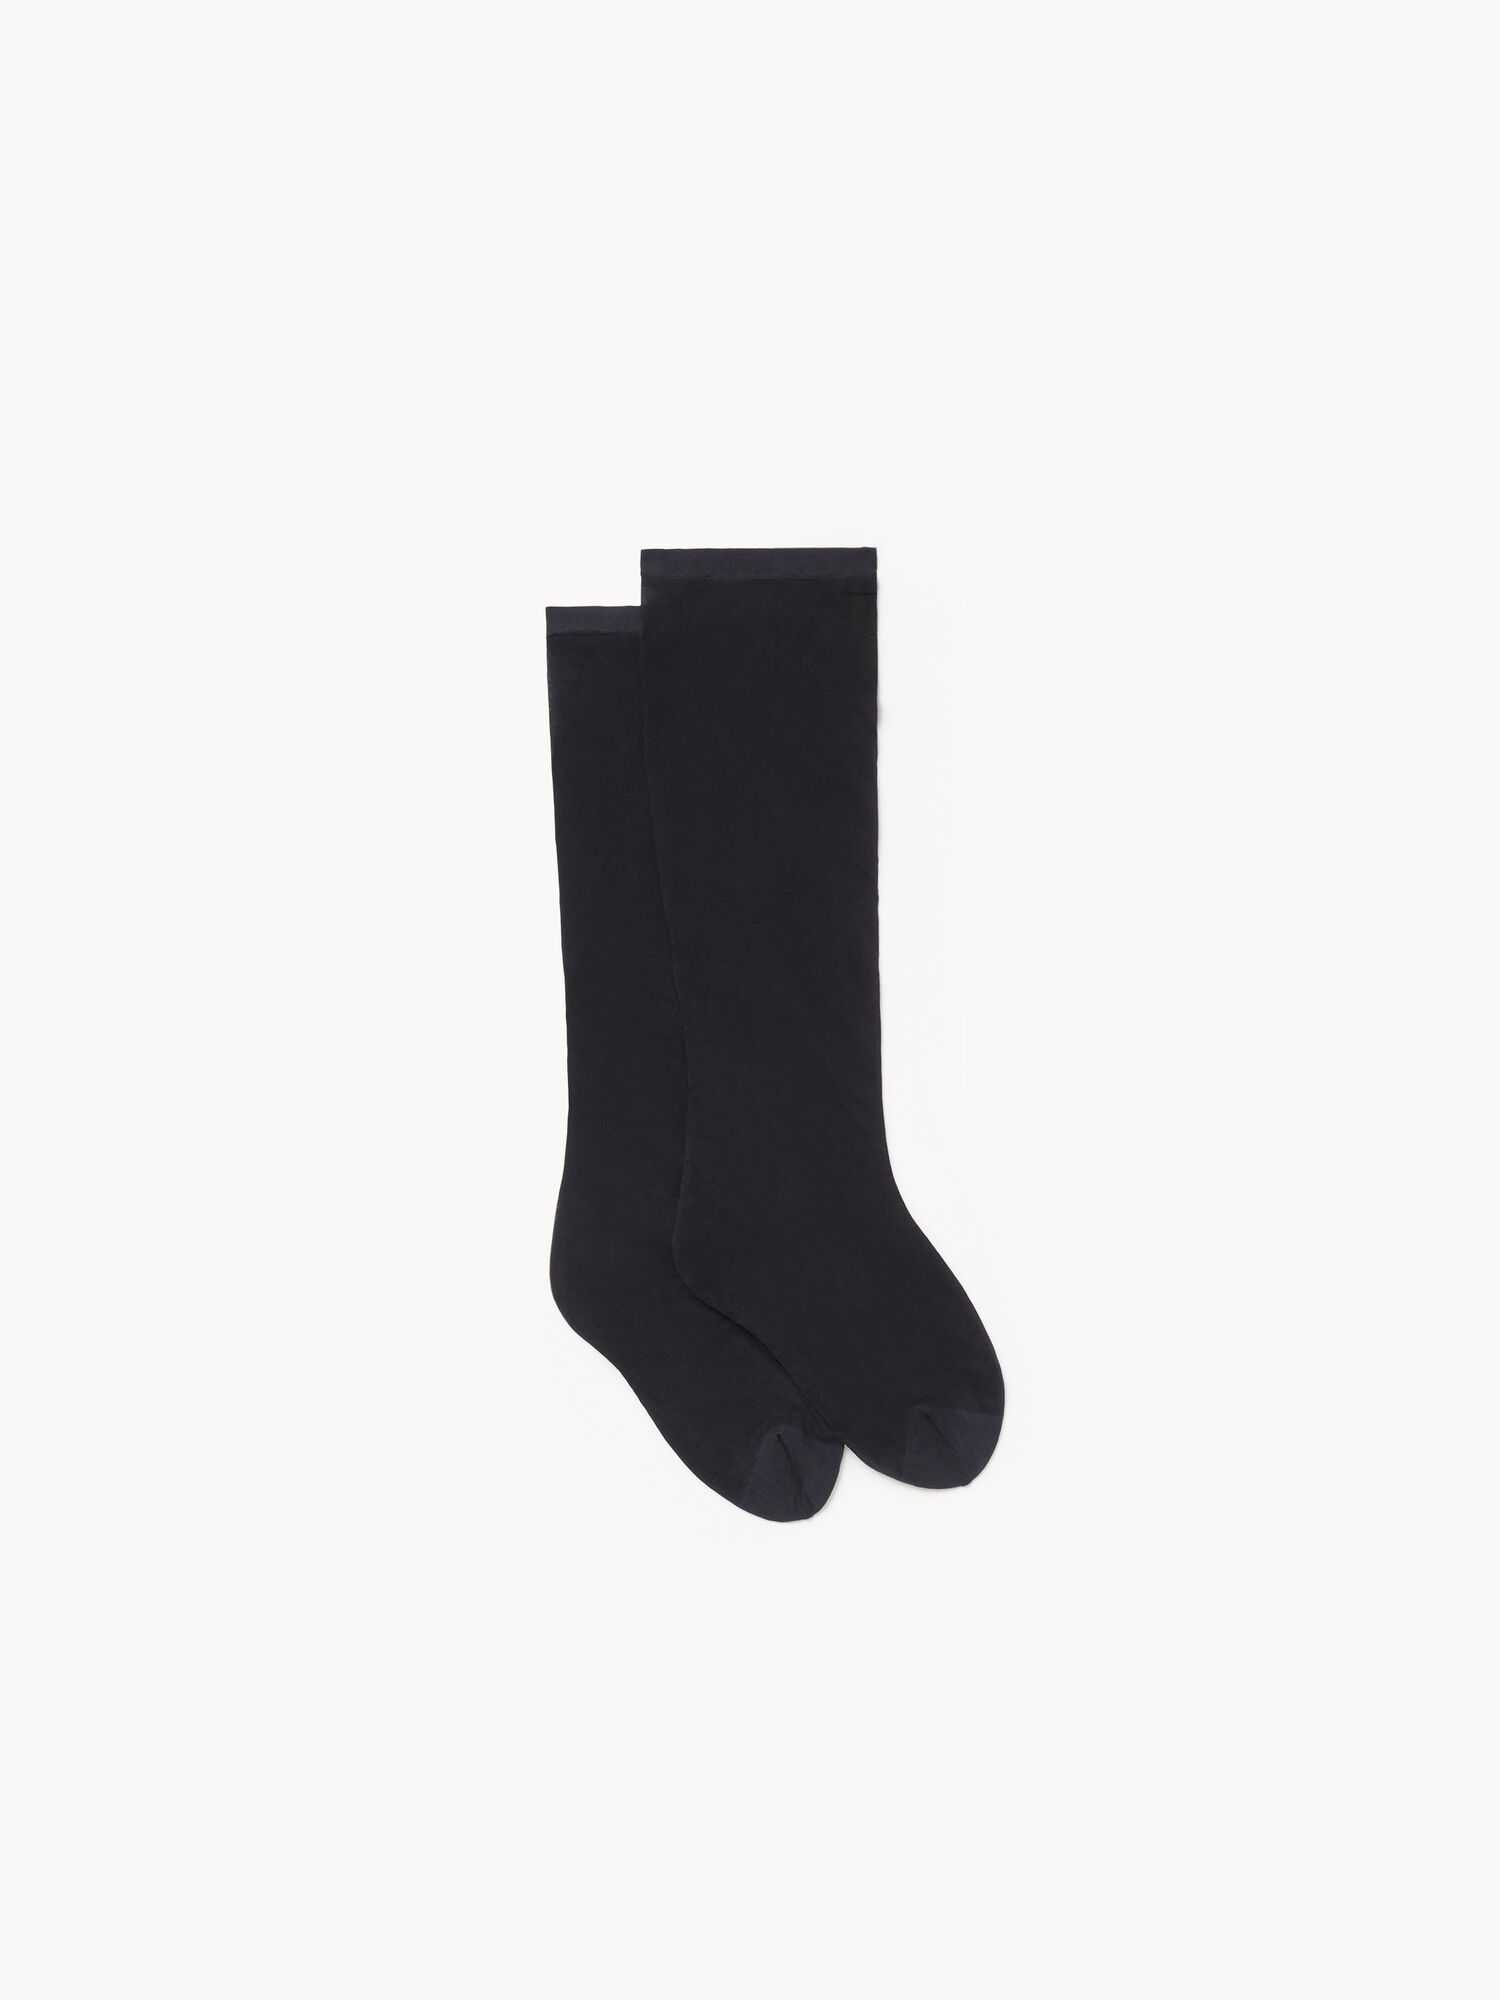 Nylah socks